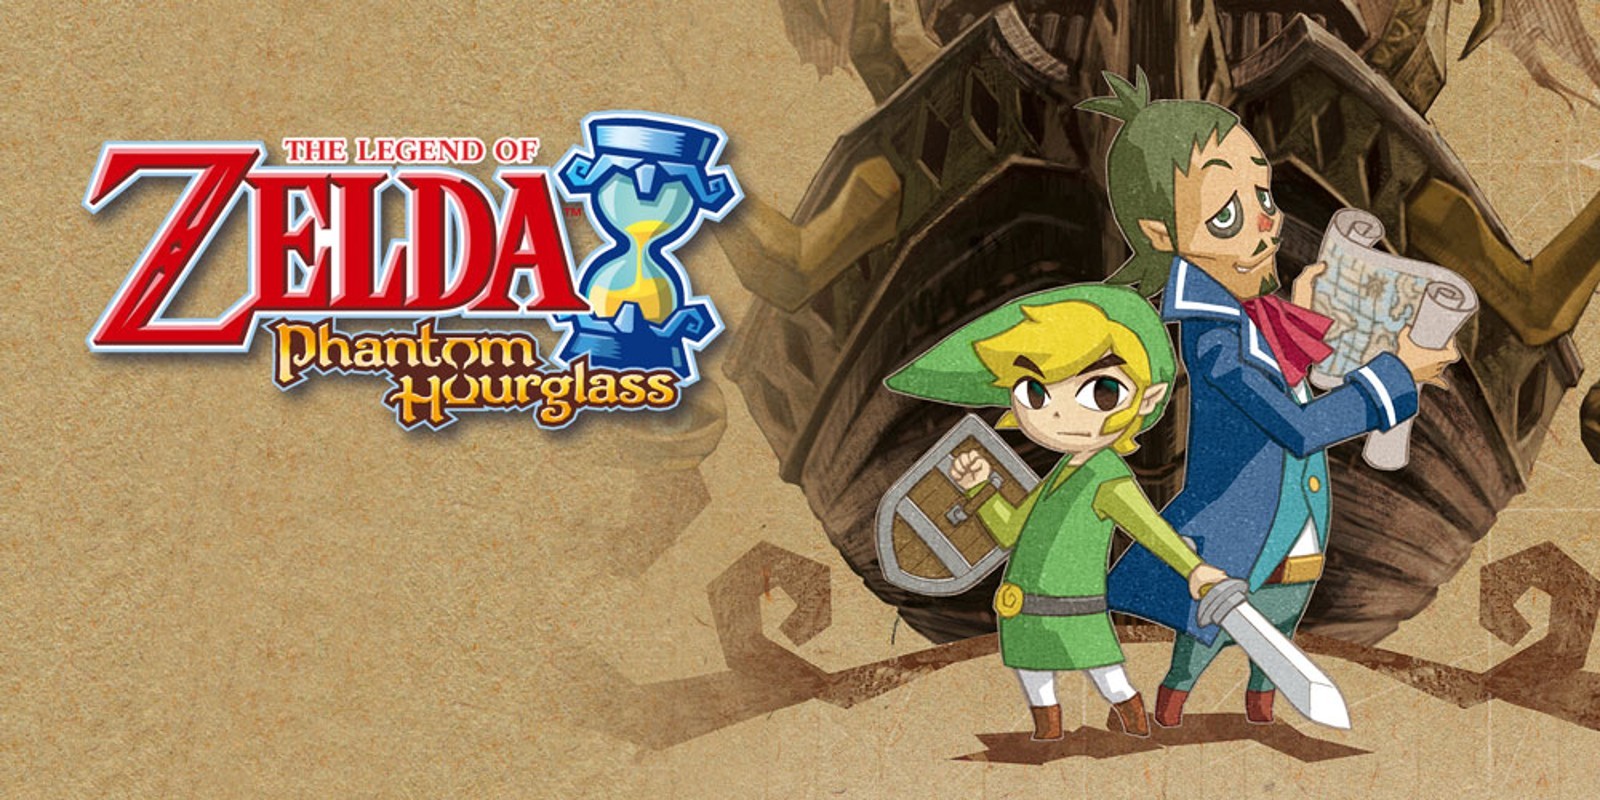 The Legend of Zelda: Phantom Hourglass. Nintendo.